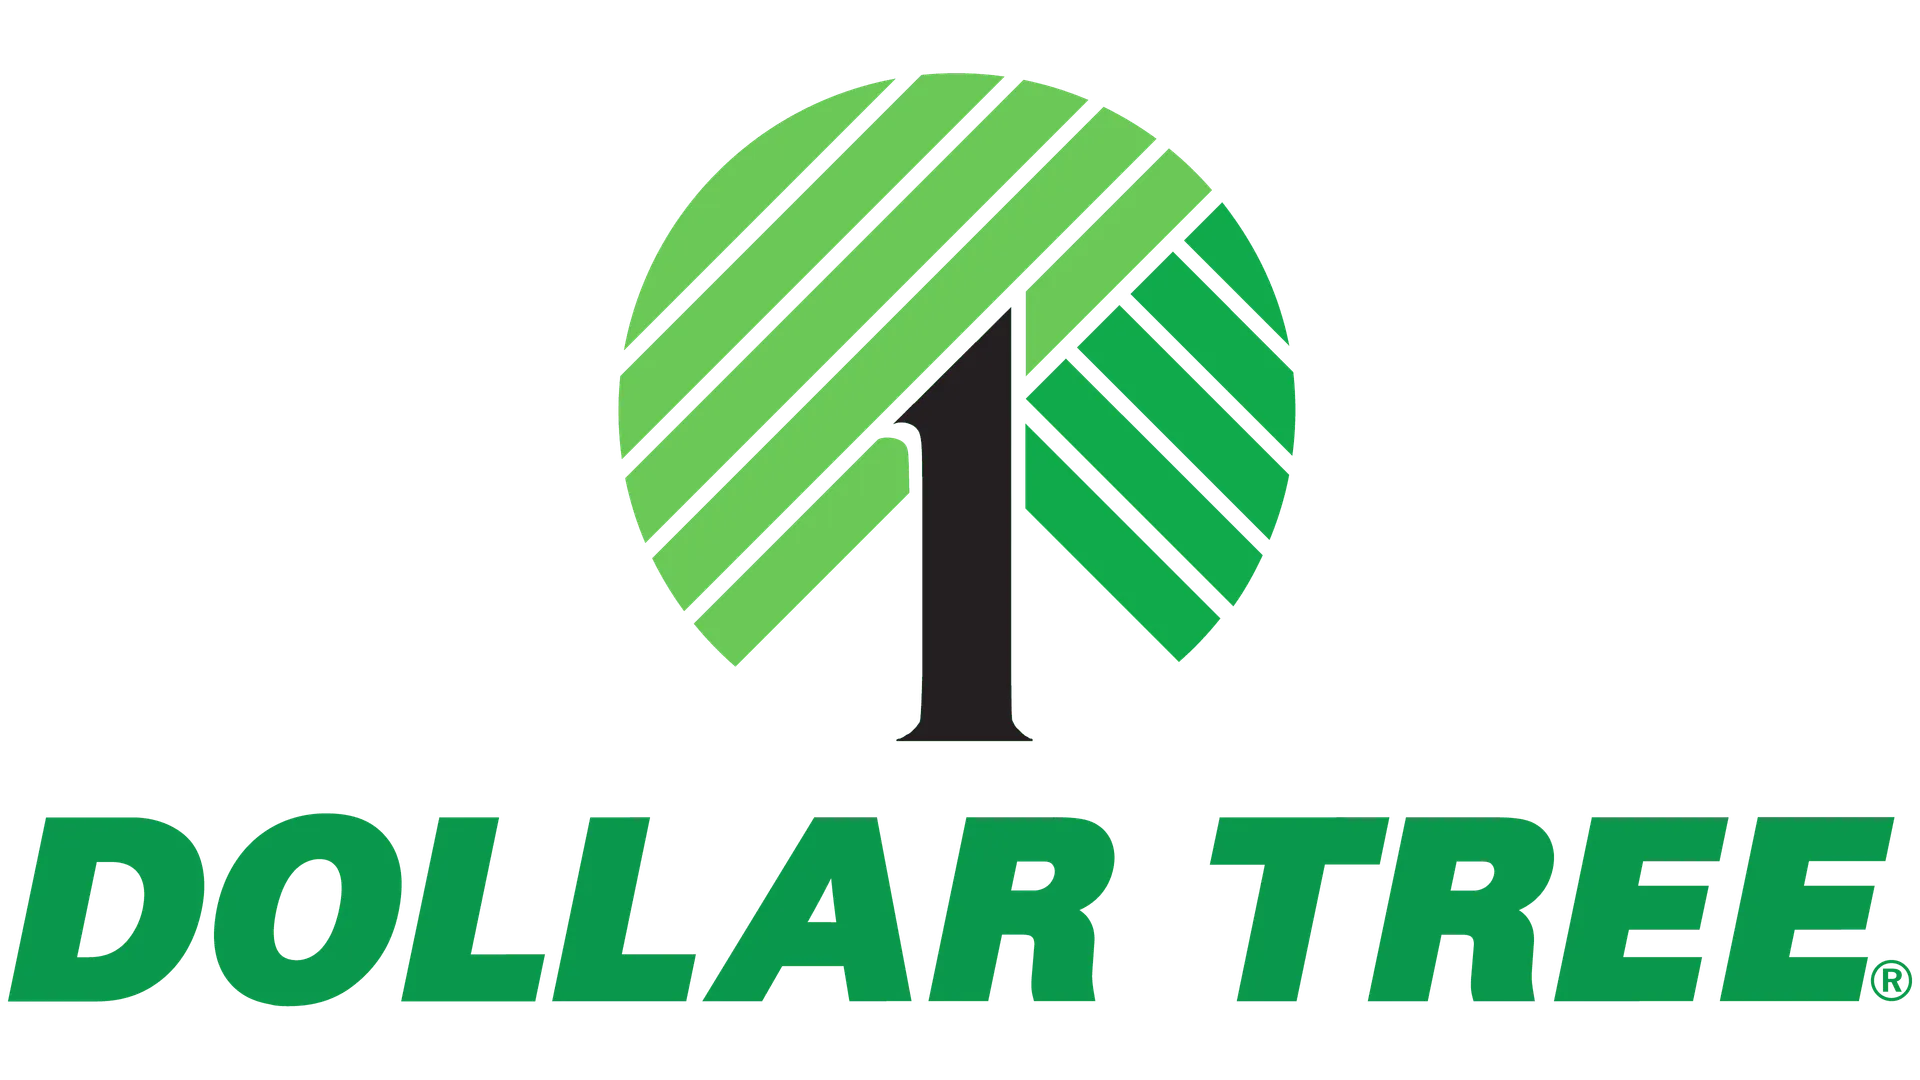 DOLLAR TREE logo de catálogo